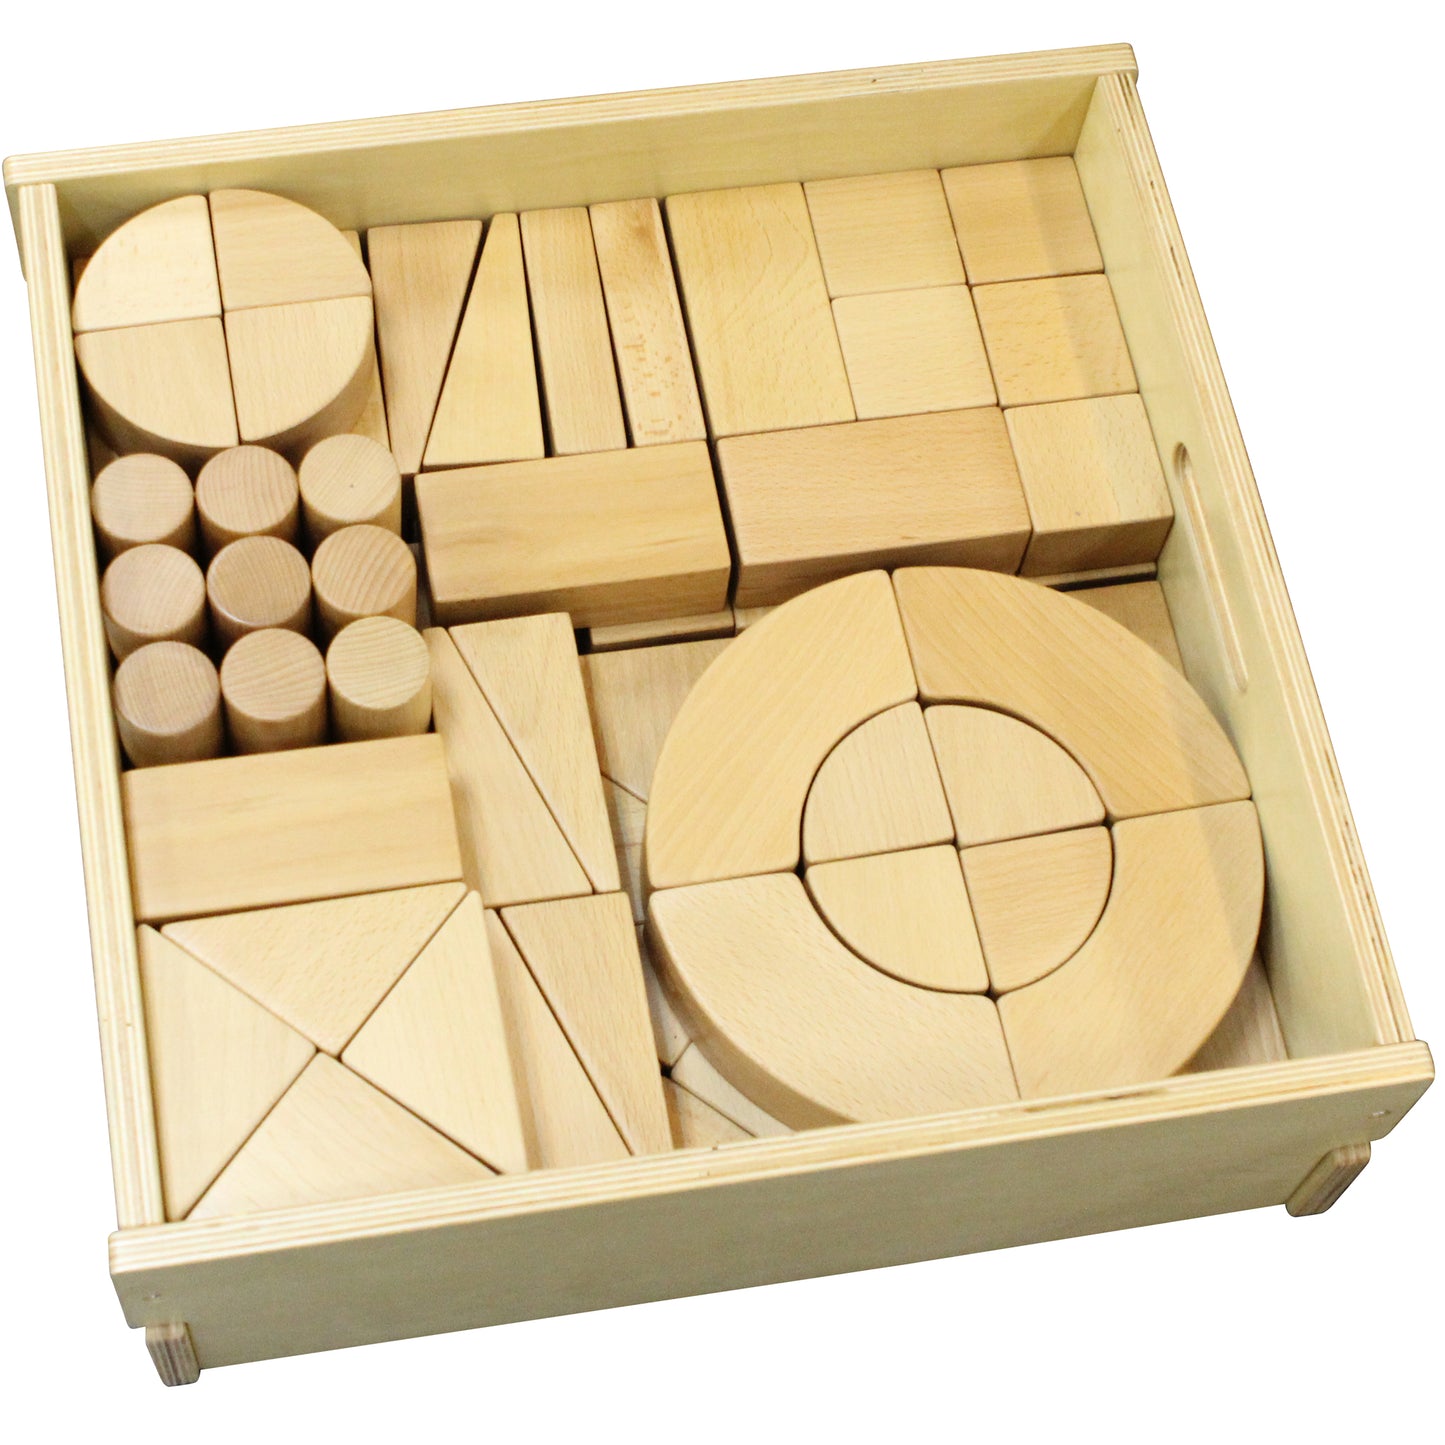 Masterkidz 92-piece Wooden Block Set 實木積木92件套